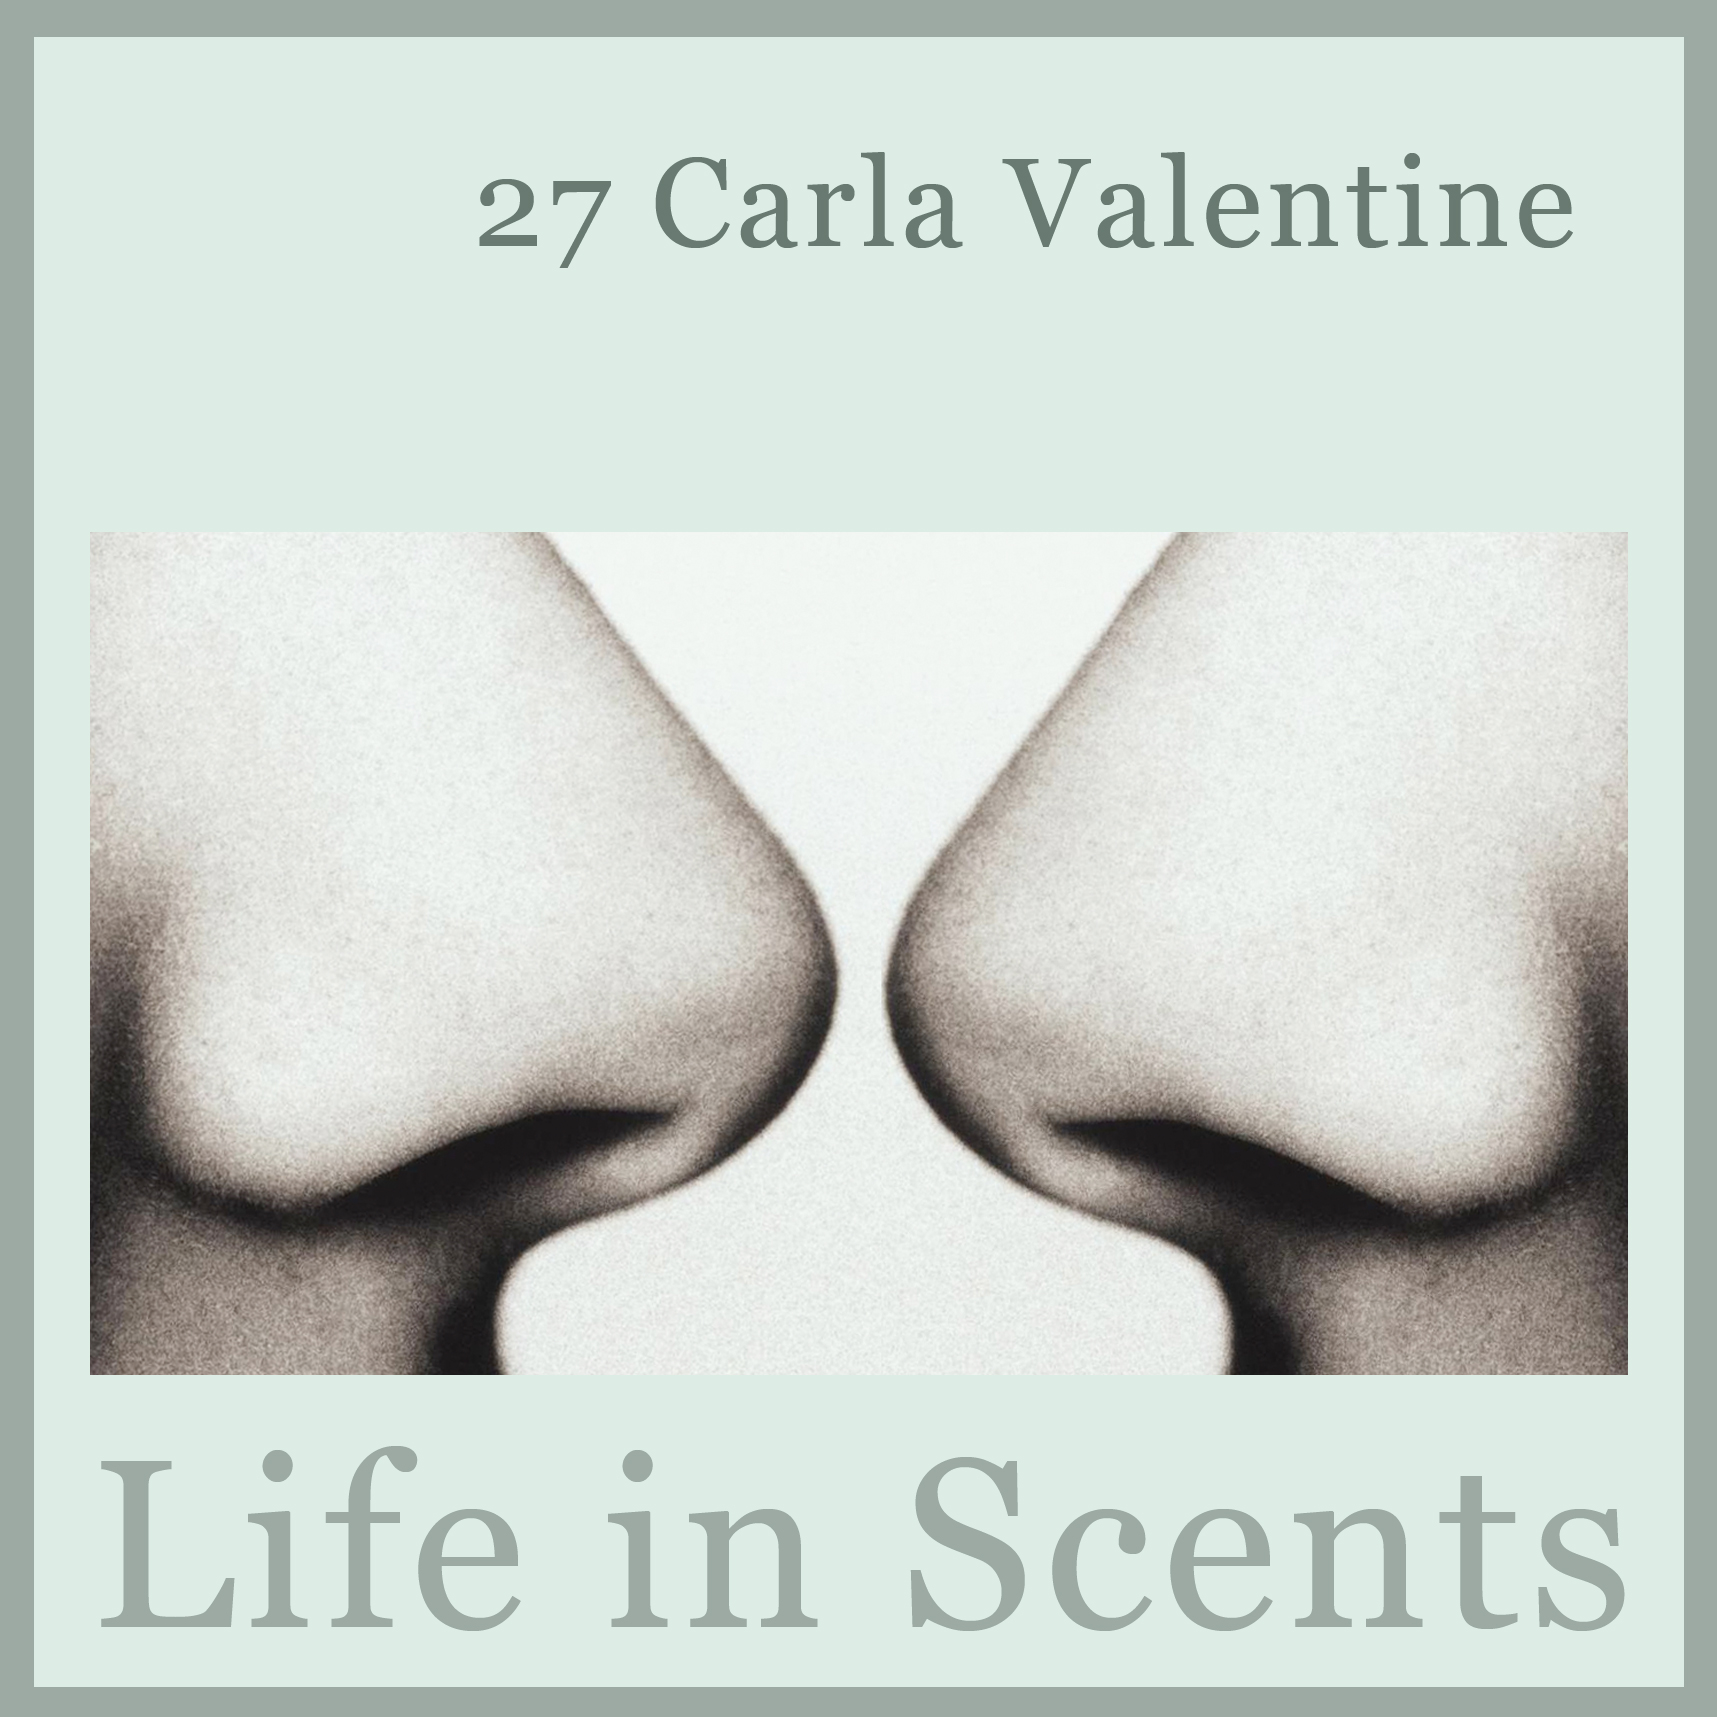 27 Carla Valentine